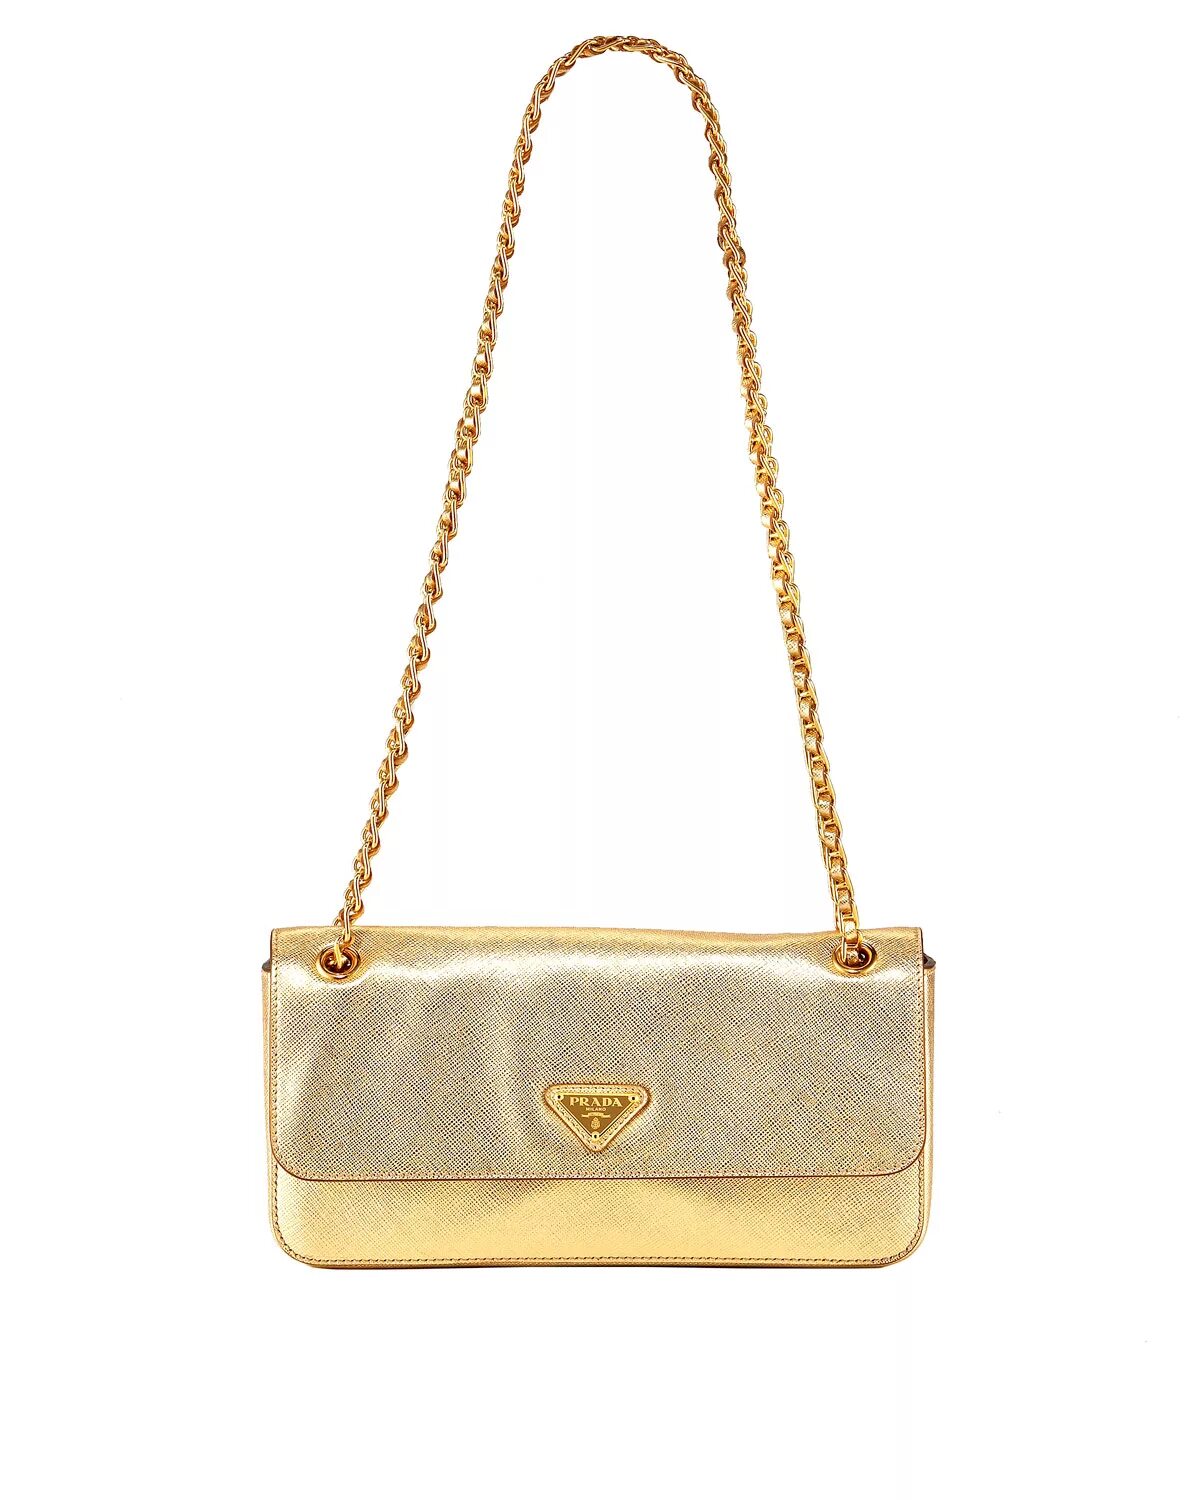 Zolla Золотая сумочка. Befree сумка Золотая. Pompoos сумка Золотая. Сумки золотистого цвета.